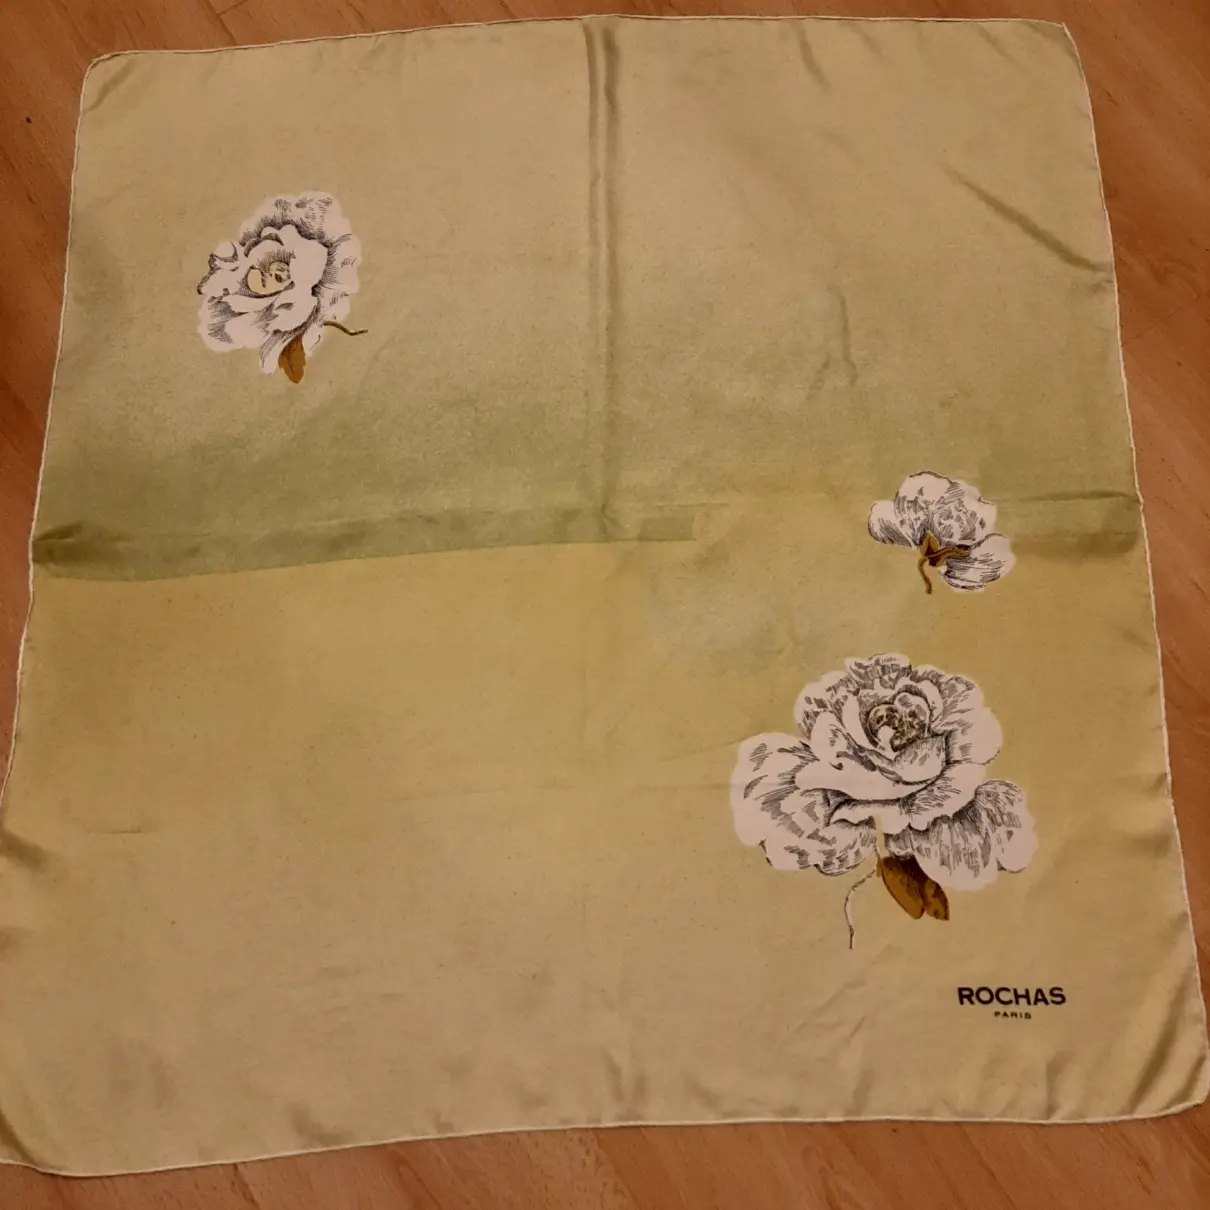 Buy Rochas Silk handkerchief online - Vintage